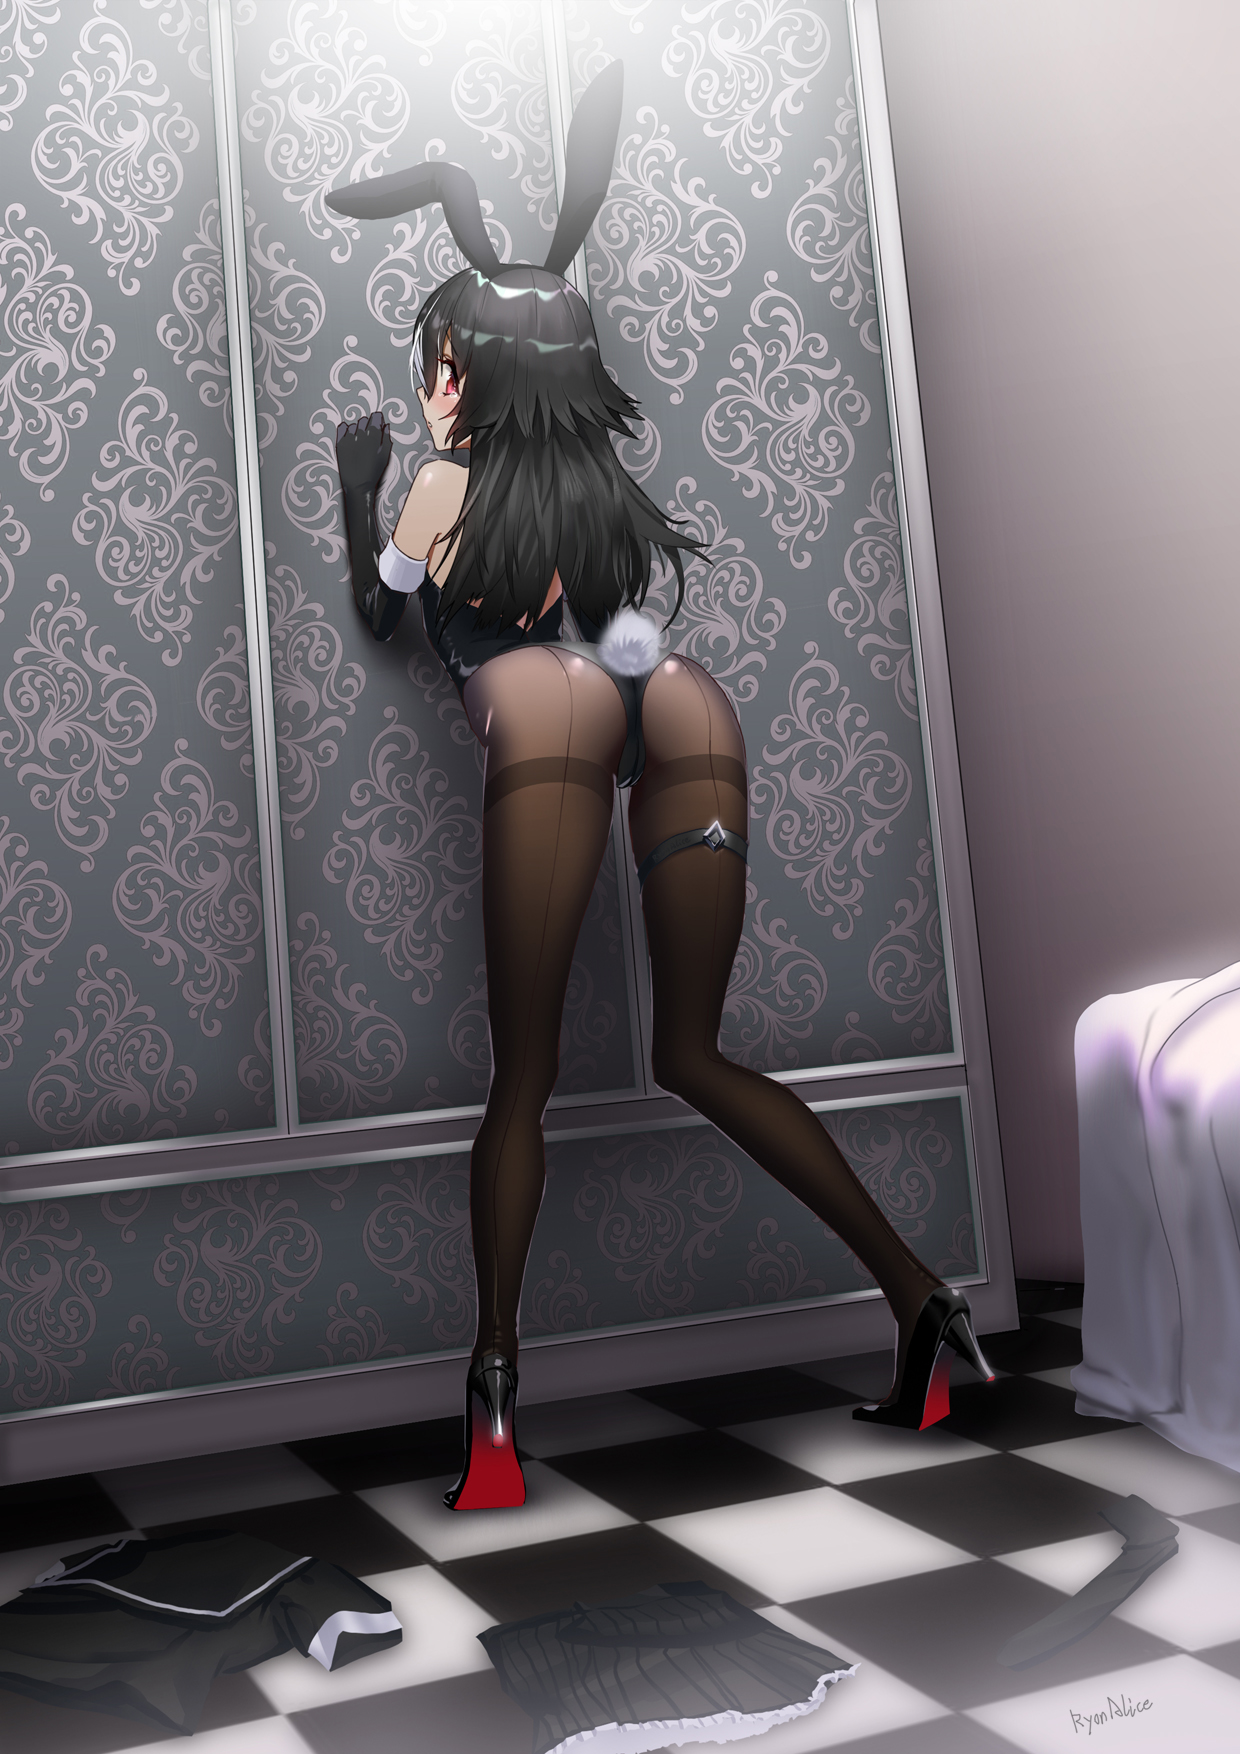 Anime 1240x1754 anime anime girls digital art artwork portrait display 2D pantyhose bent over chess floor bunny girl looking back ass bunny suit black hair